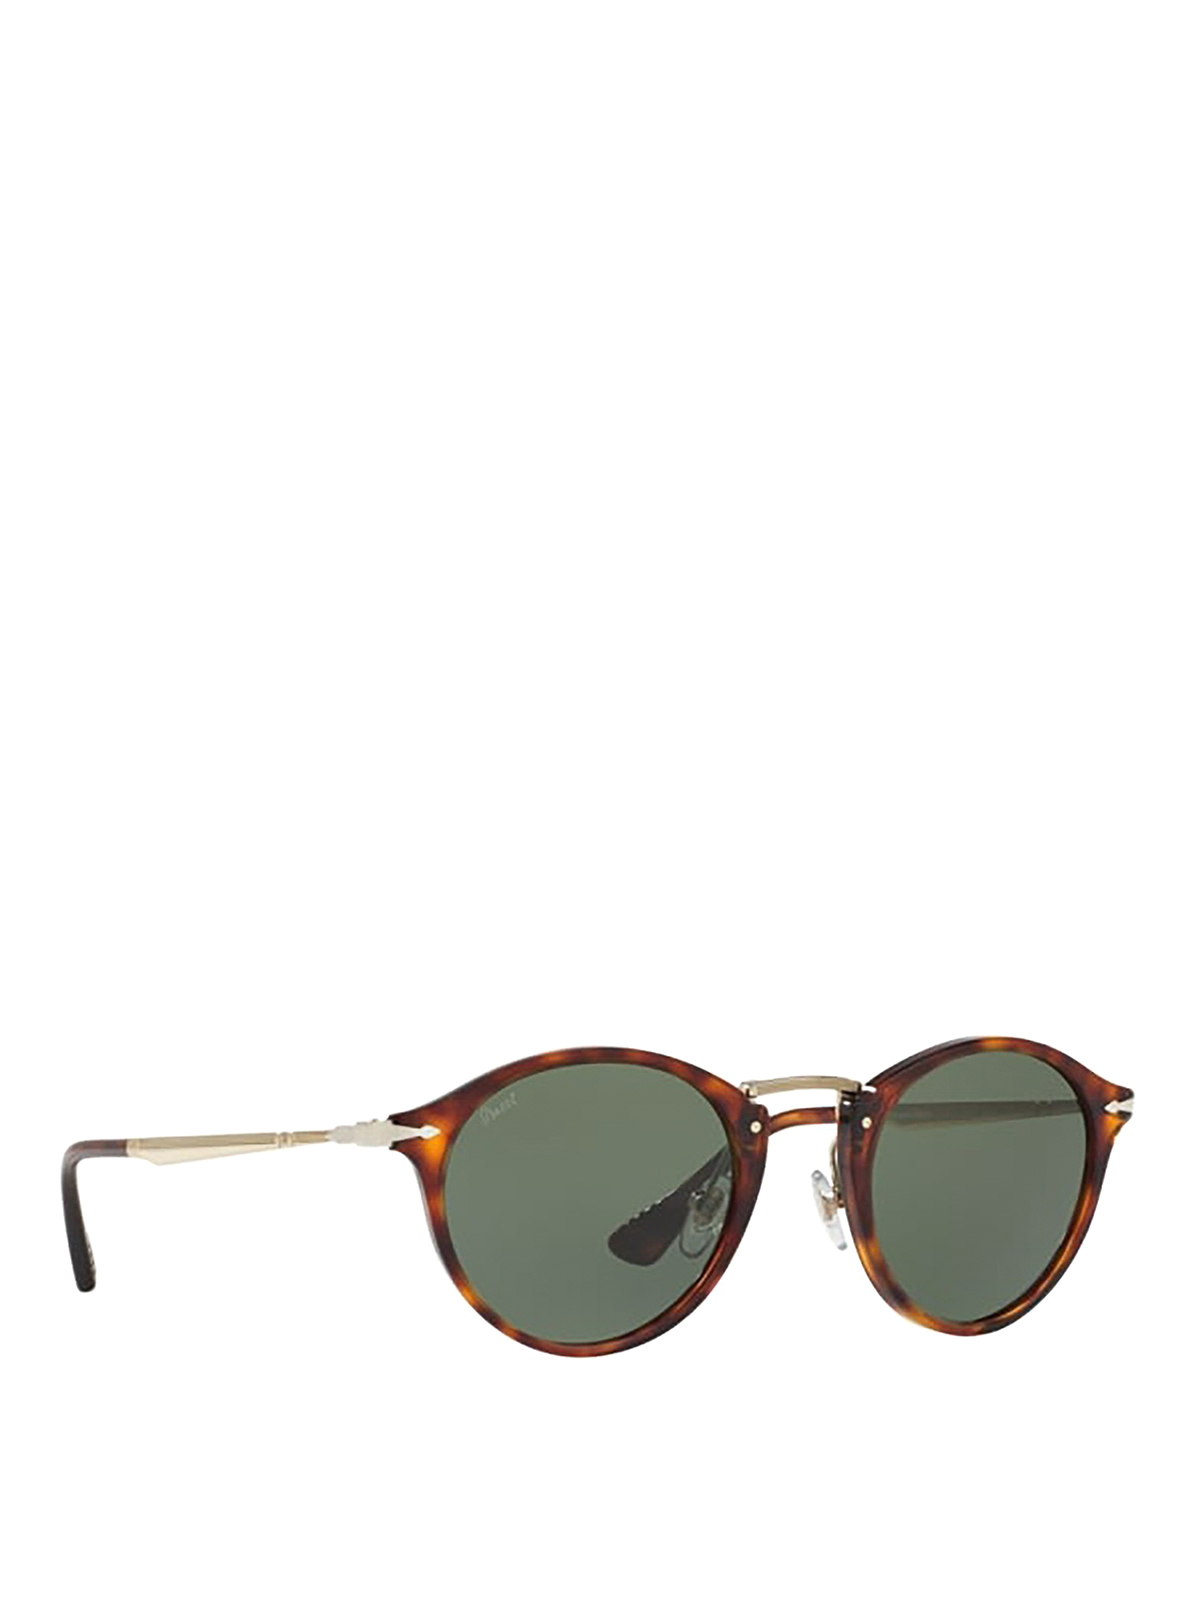 Persol Calligrapher Edition Sunglasses In Brown